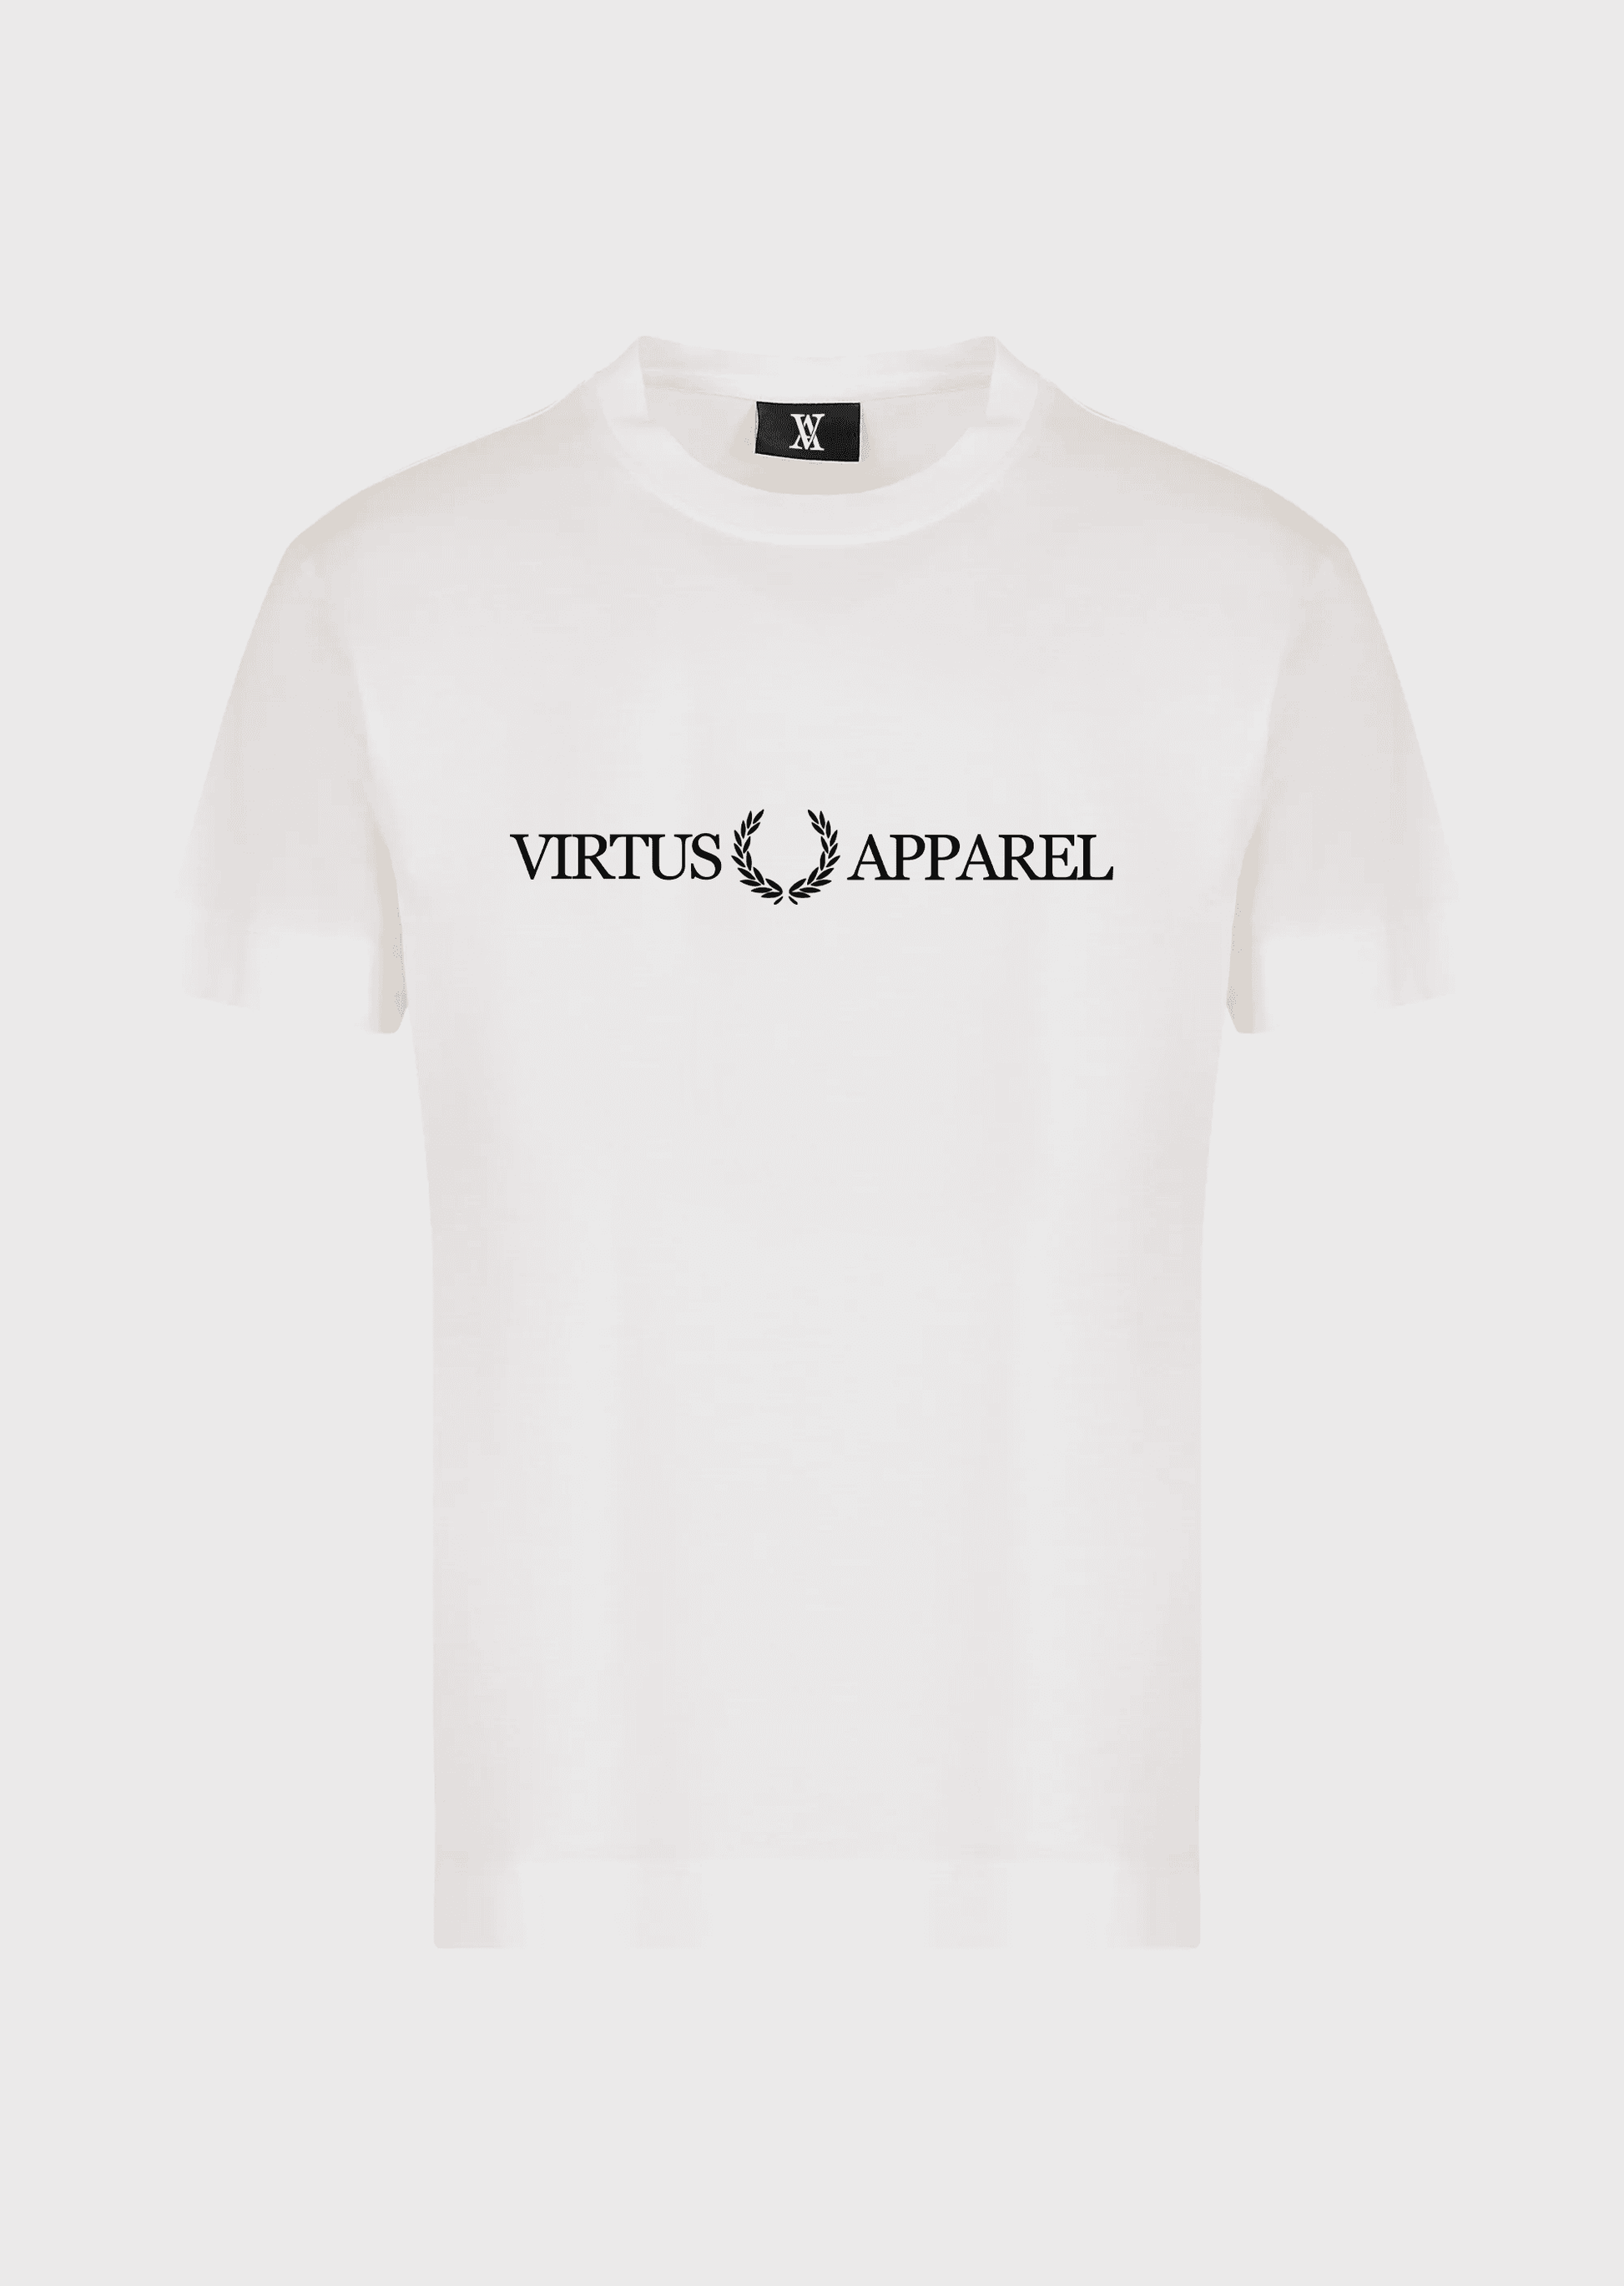 Virtus Apparel Store – Apparel T-Shirt Virtus